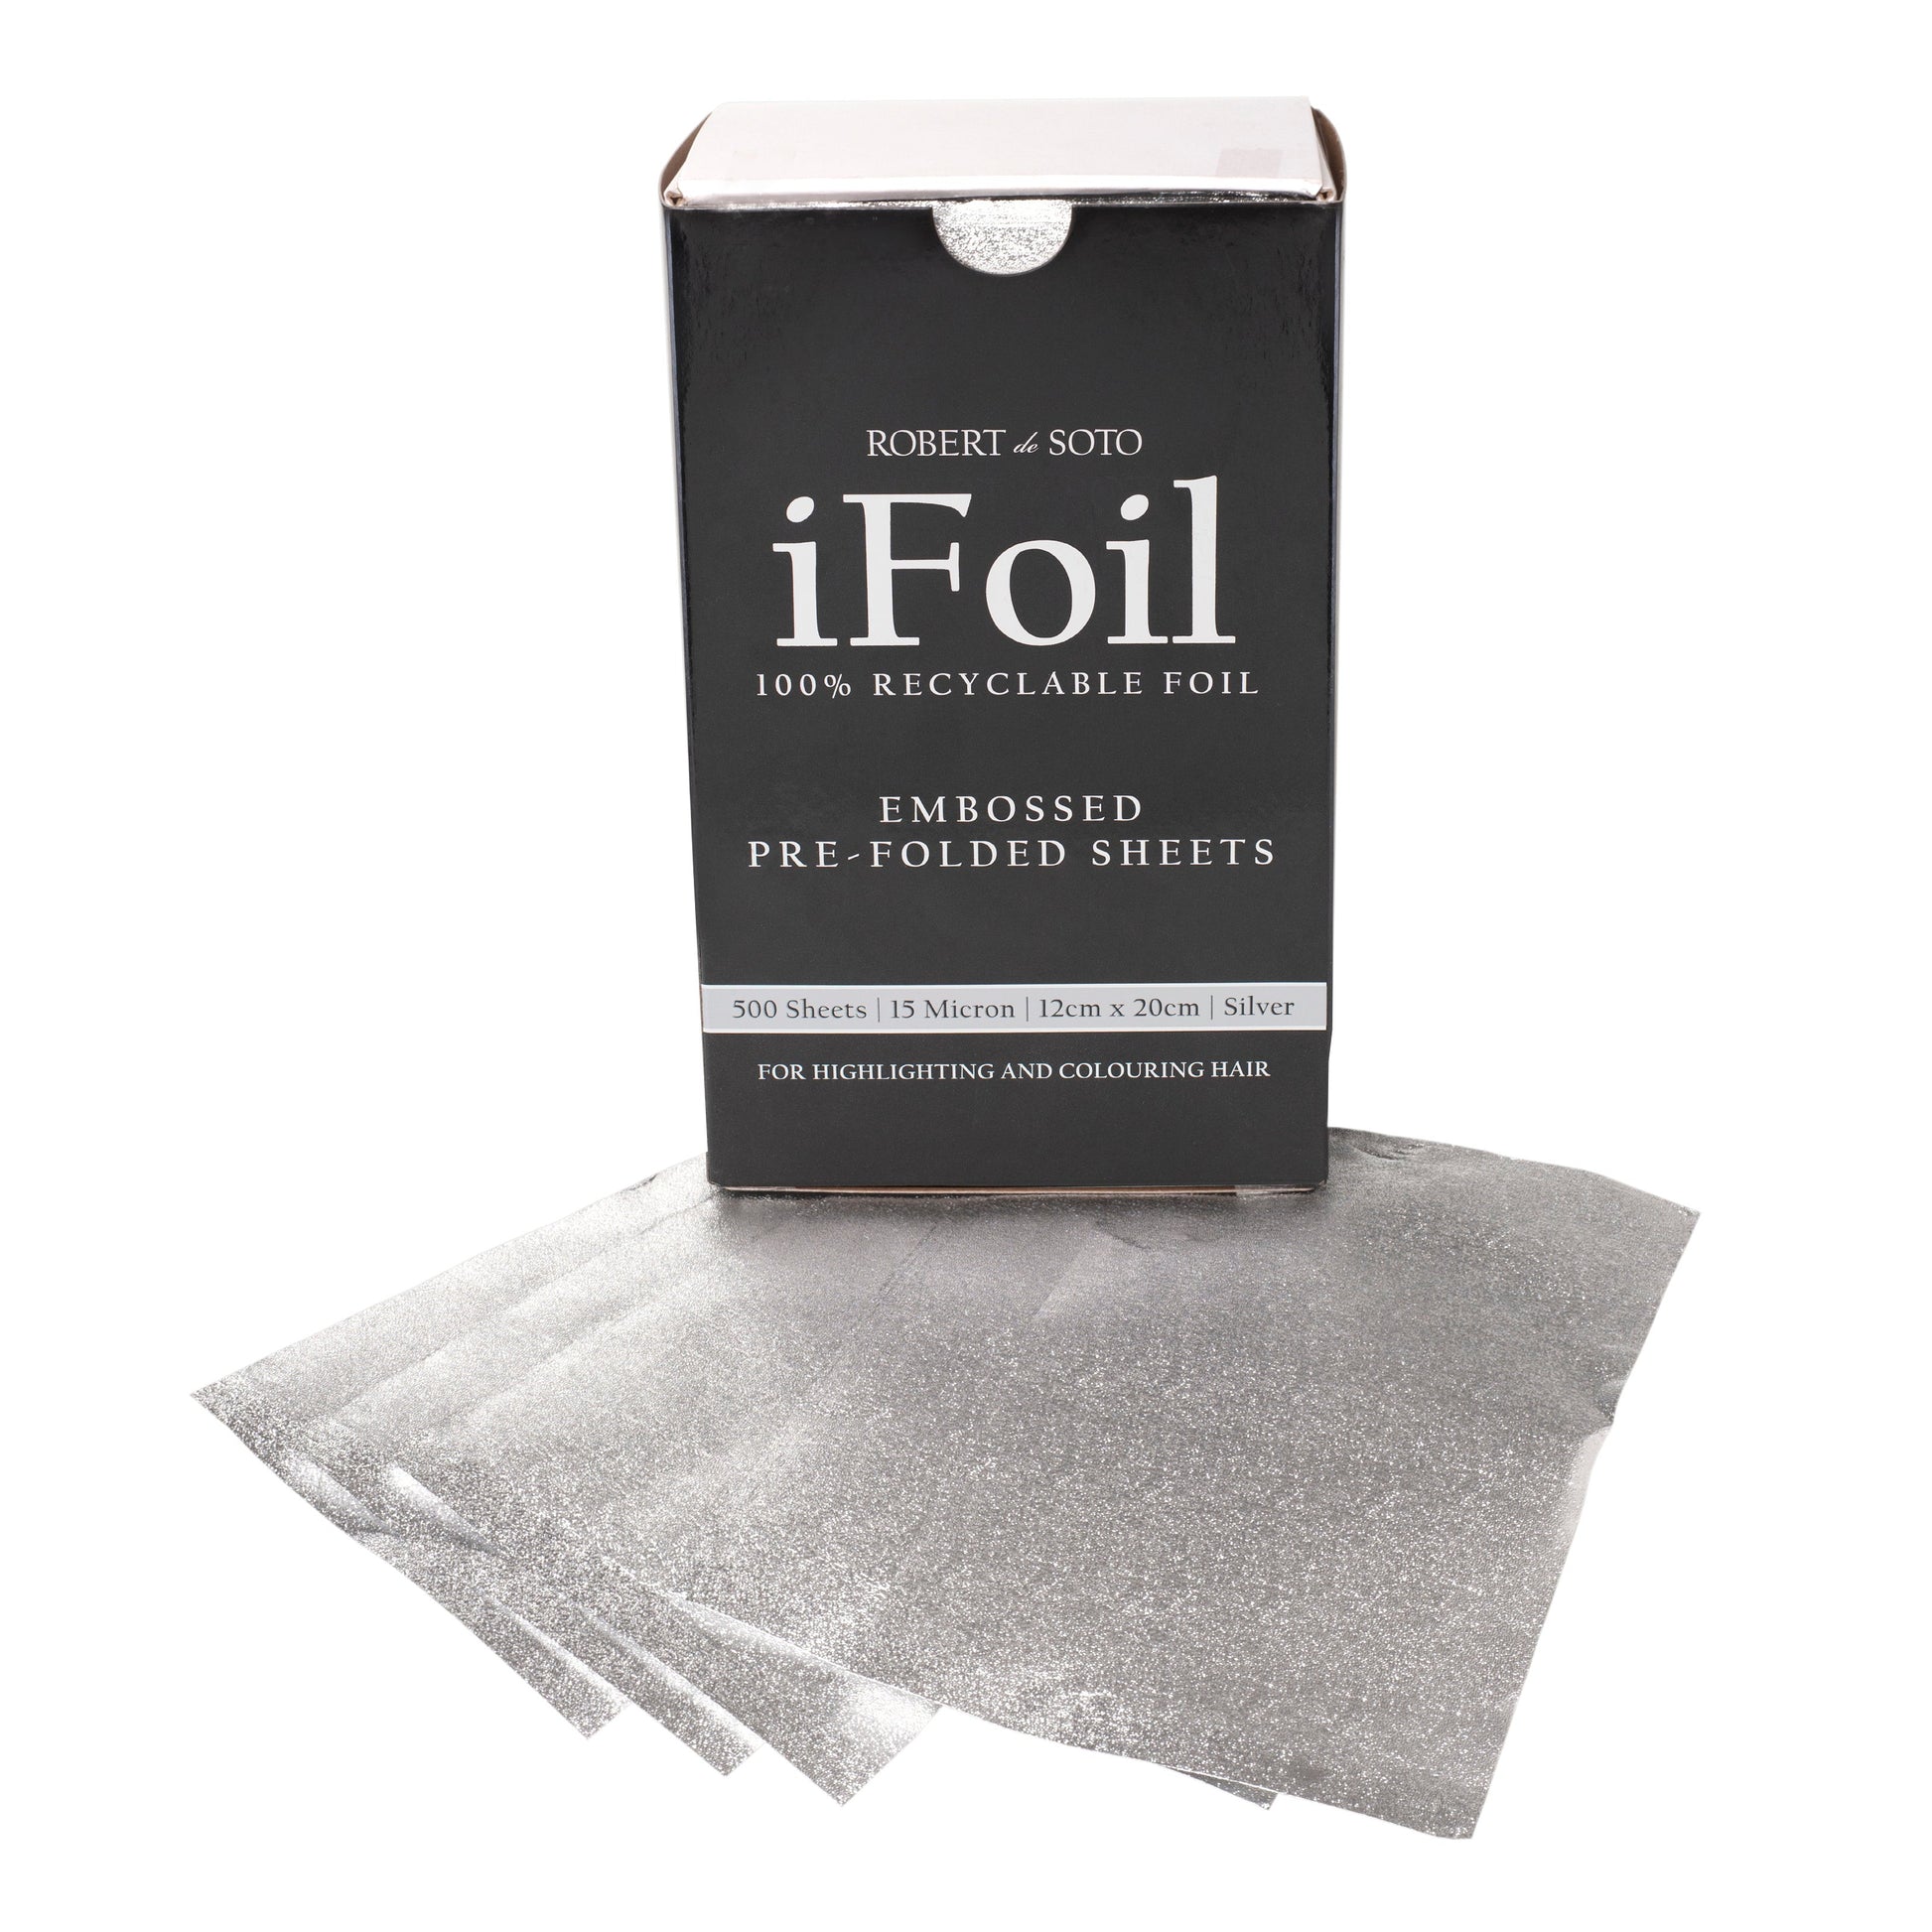 Robert Desoto Ifoil 15 Micron Embossed Pre Cut Foil 500 Sheets 120 X 200mm - Silver